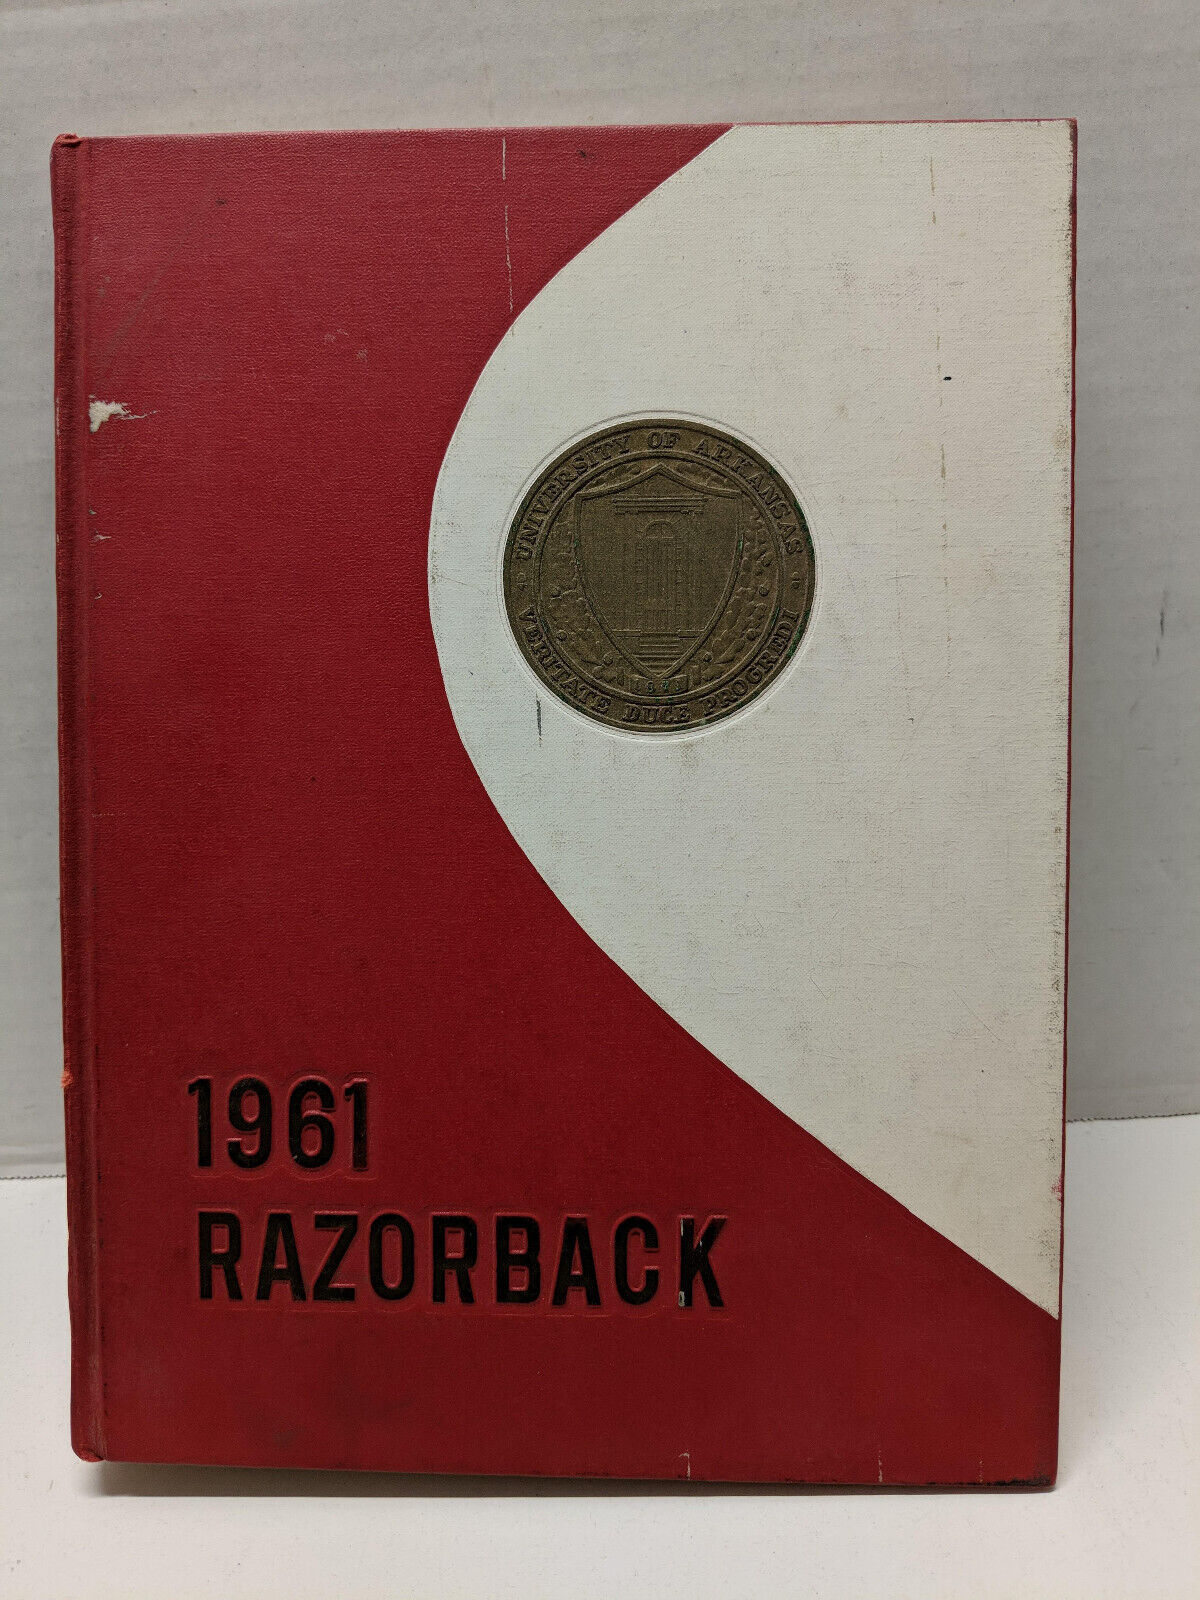 Vintage 1961 University of Arkansas Razorback Annual Yearbook